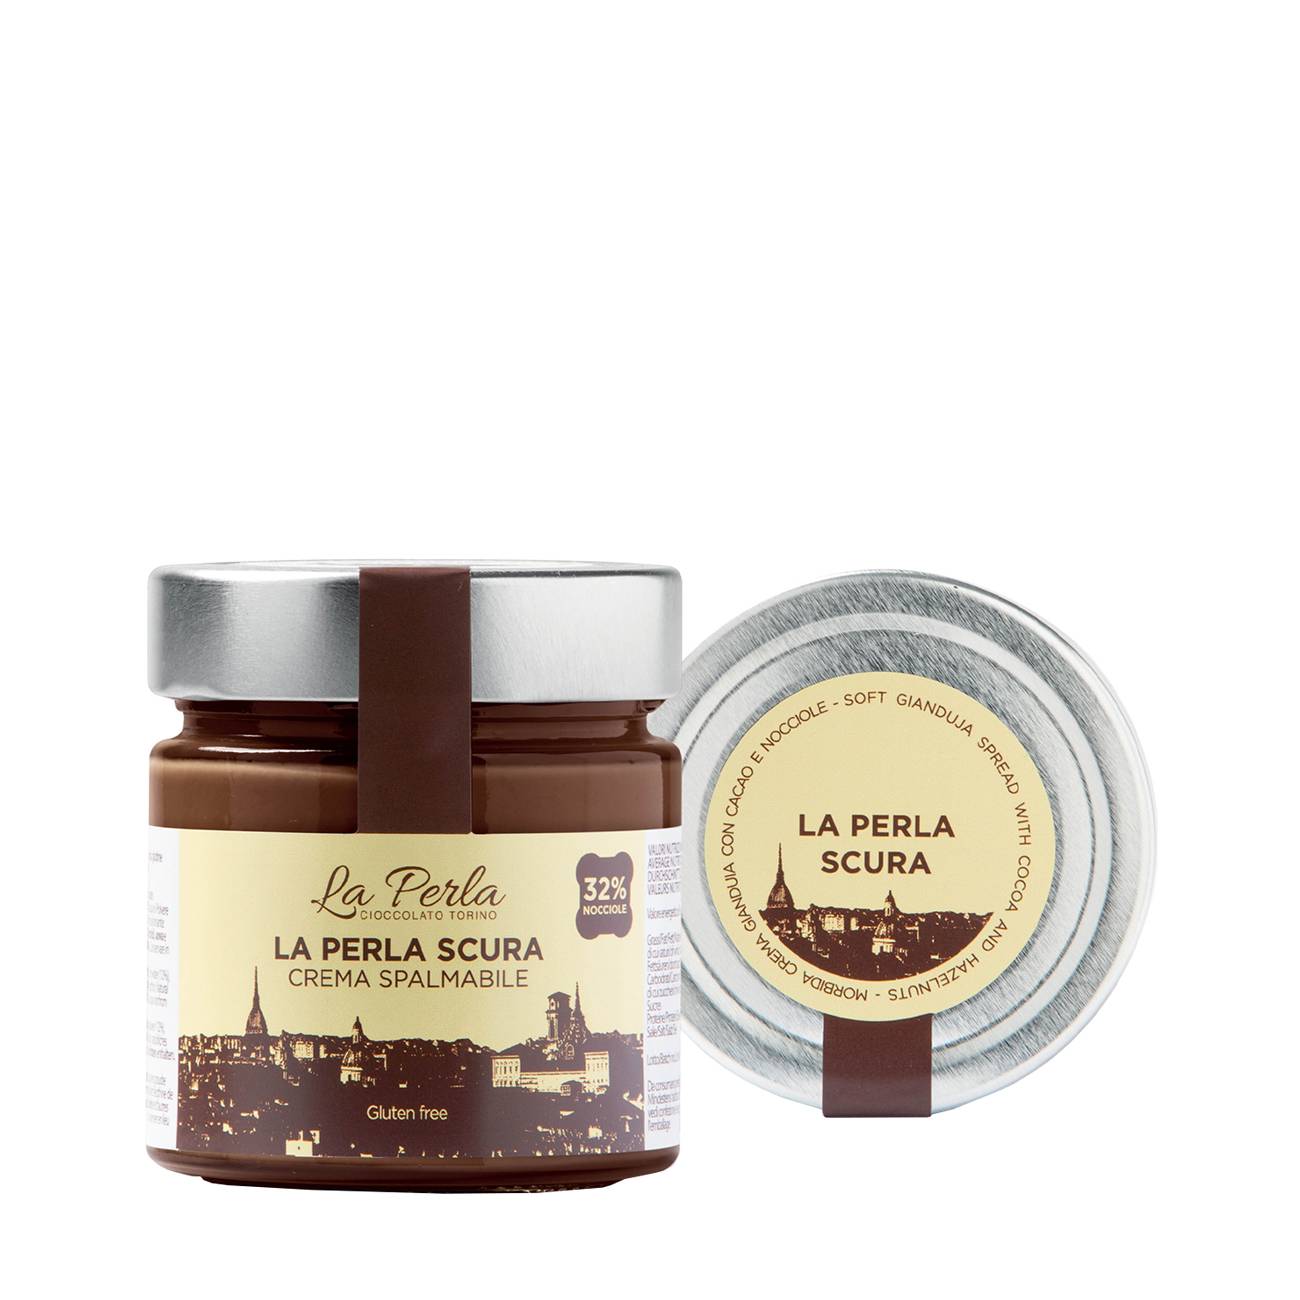 The Dark Pearl Spreadable Cream with Cocoa & Piedmont Hazelnuts (32%). 200 gr